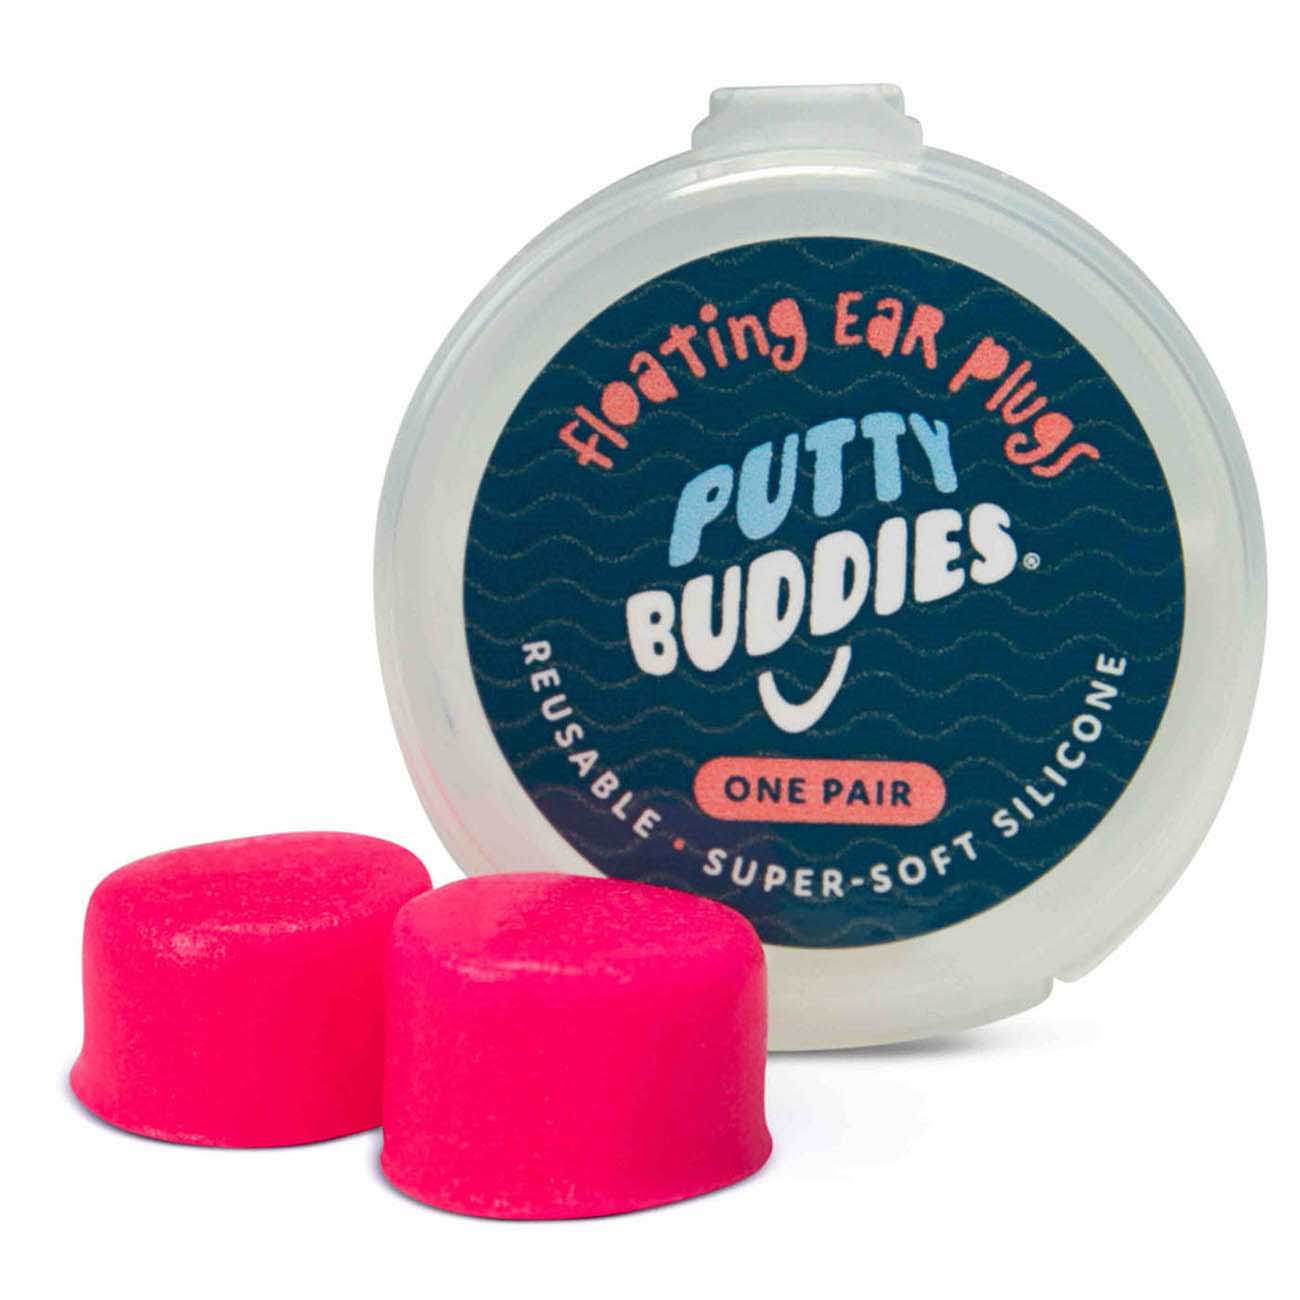 Putty Buddies Floating Ear Plugs Pink